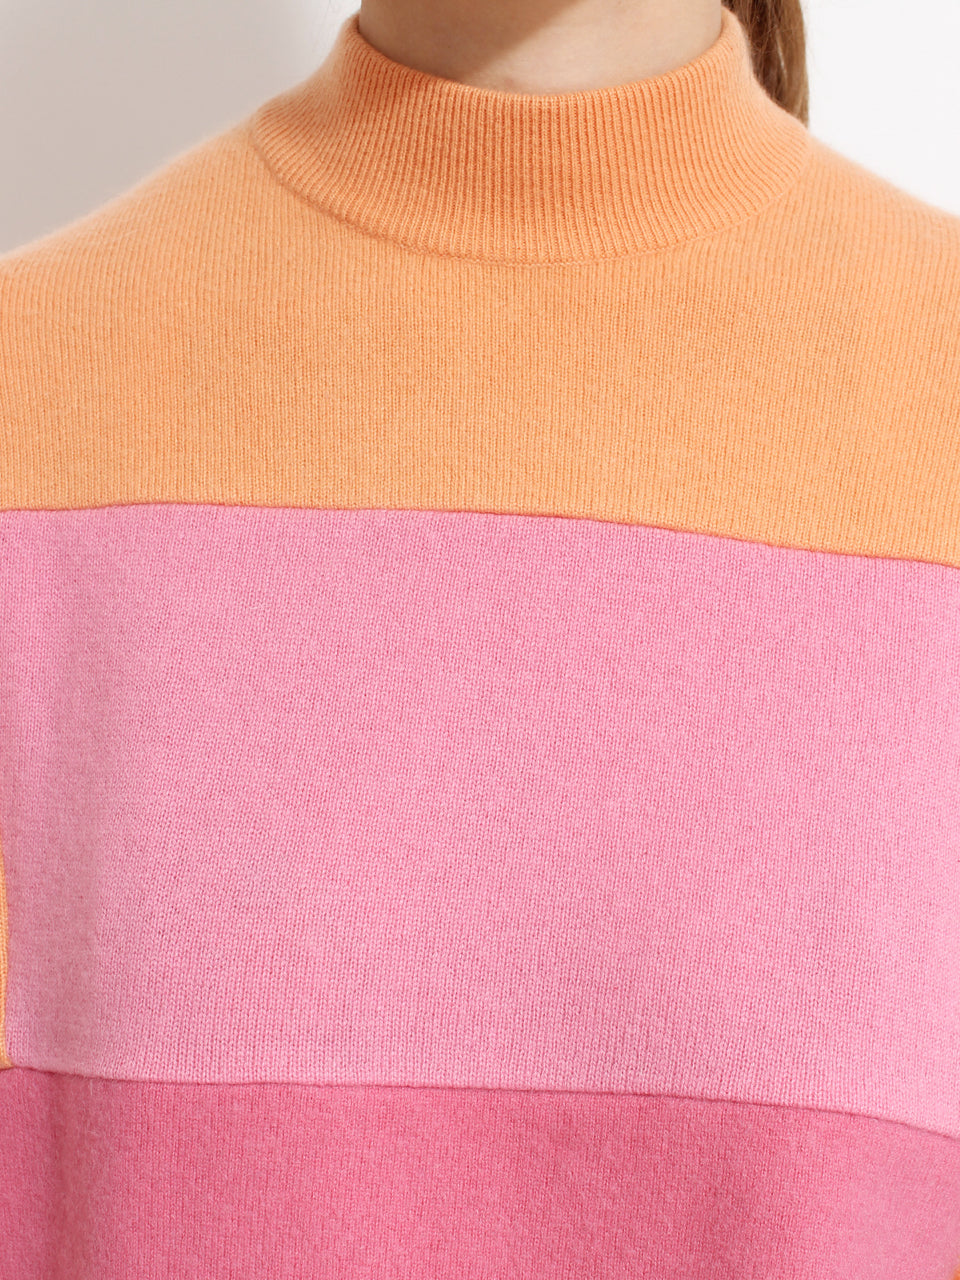 JAEGER sweater